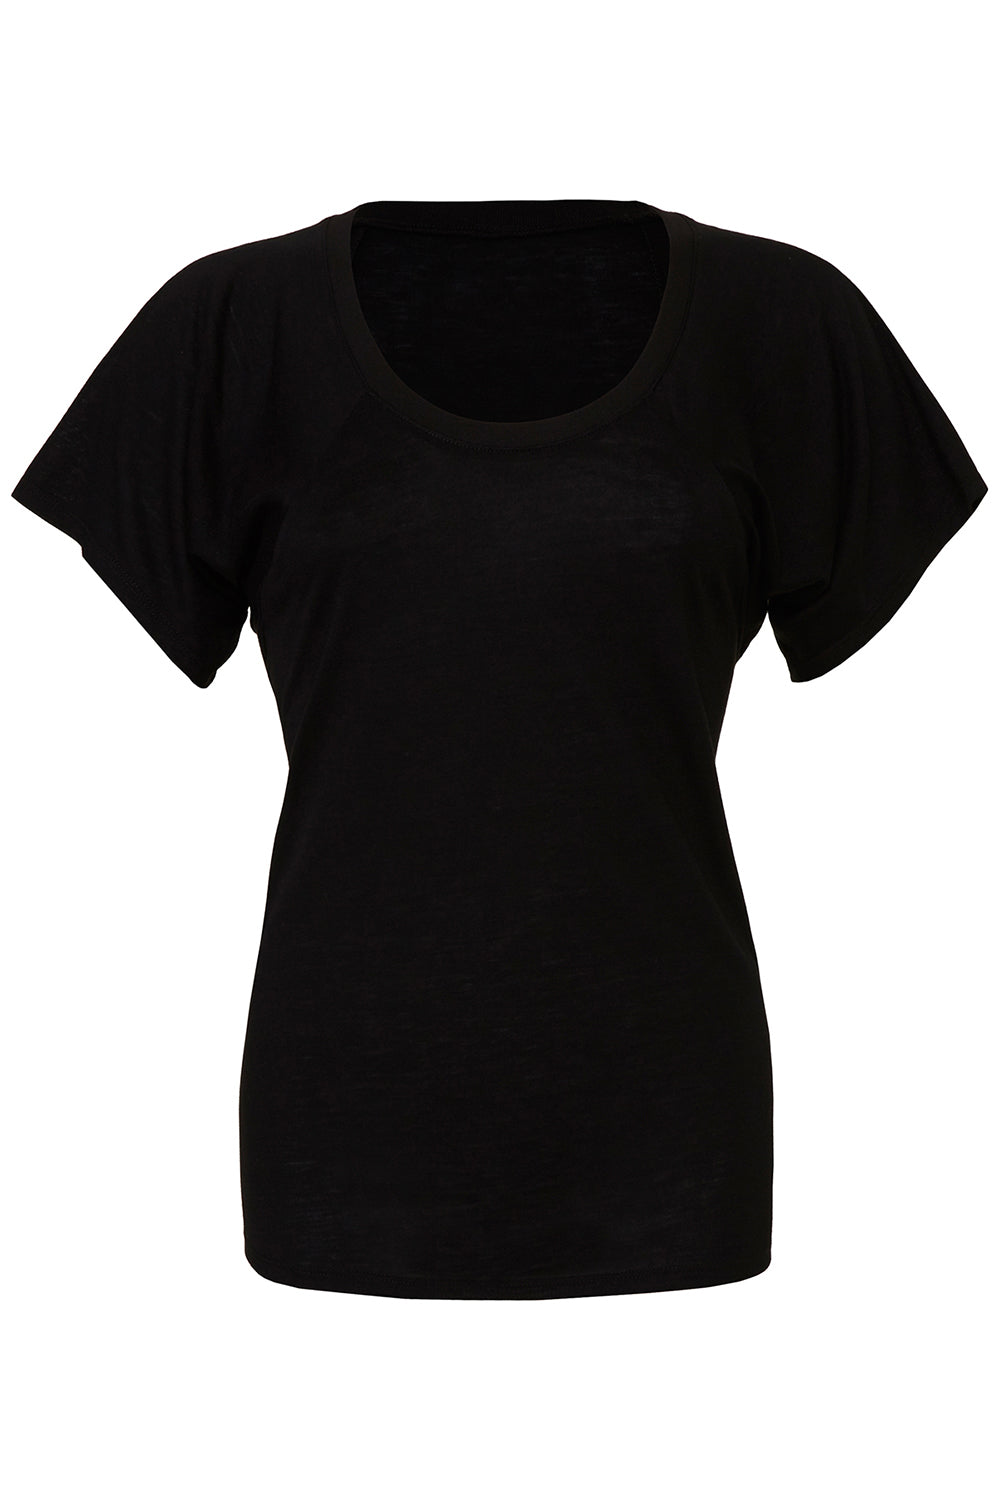 Bella + Canvas B8801/8801 Womens Flowy Short Sleeve Scoop Neck T-Shirt Black Flat Front